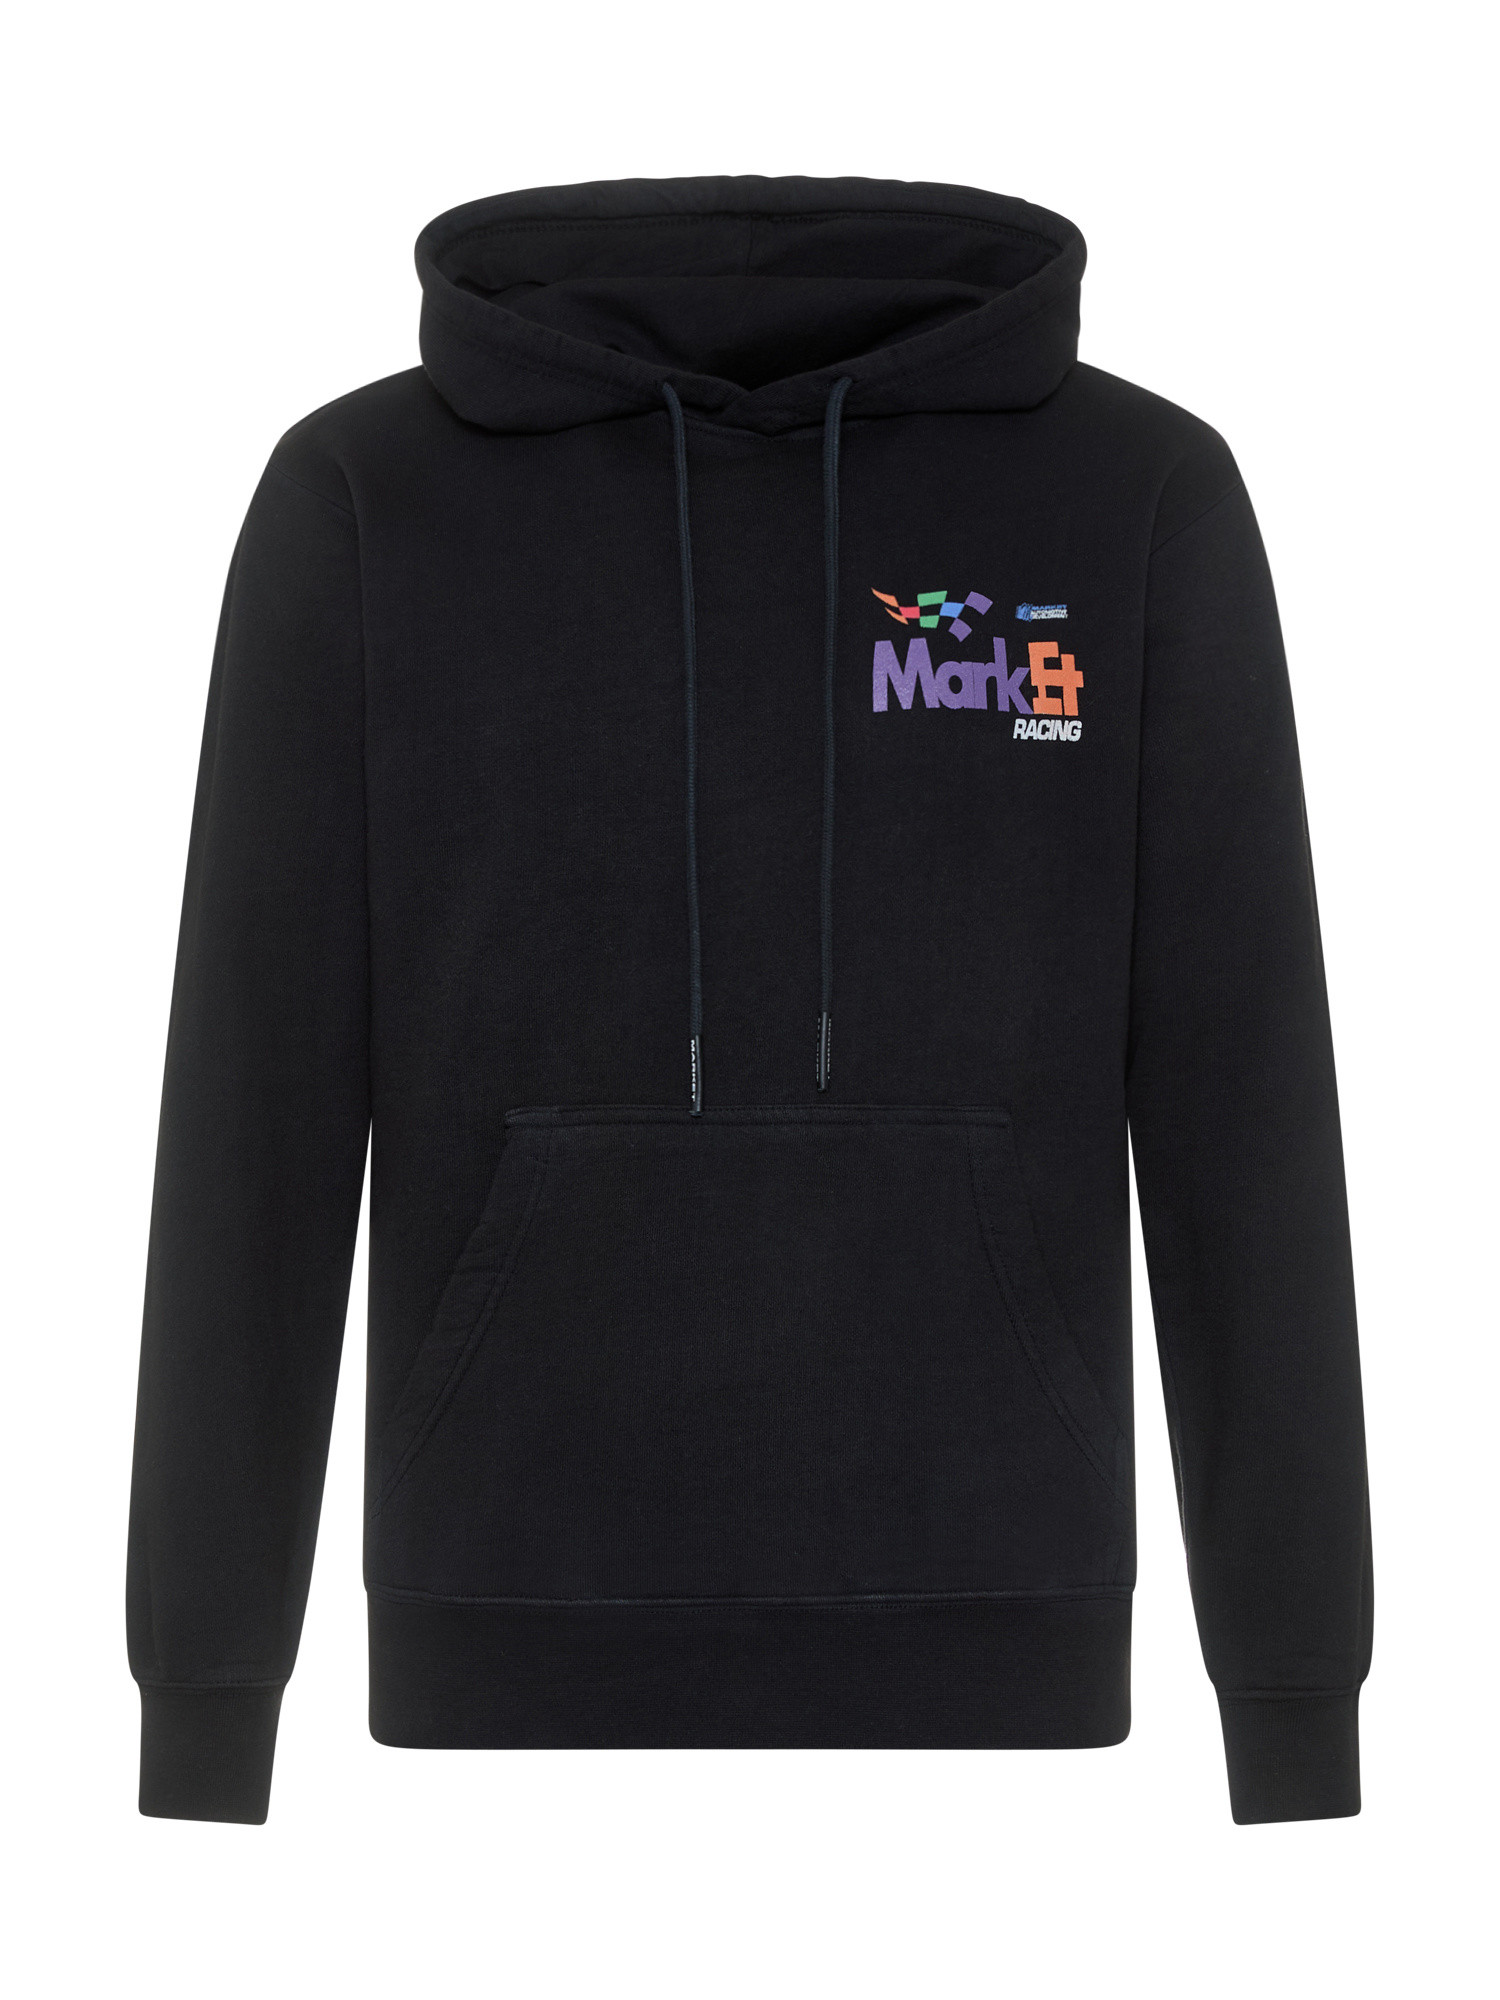 Market - Hooded sweatshirt with print, Black, large image number 0